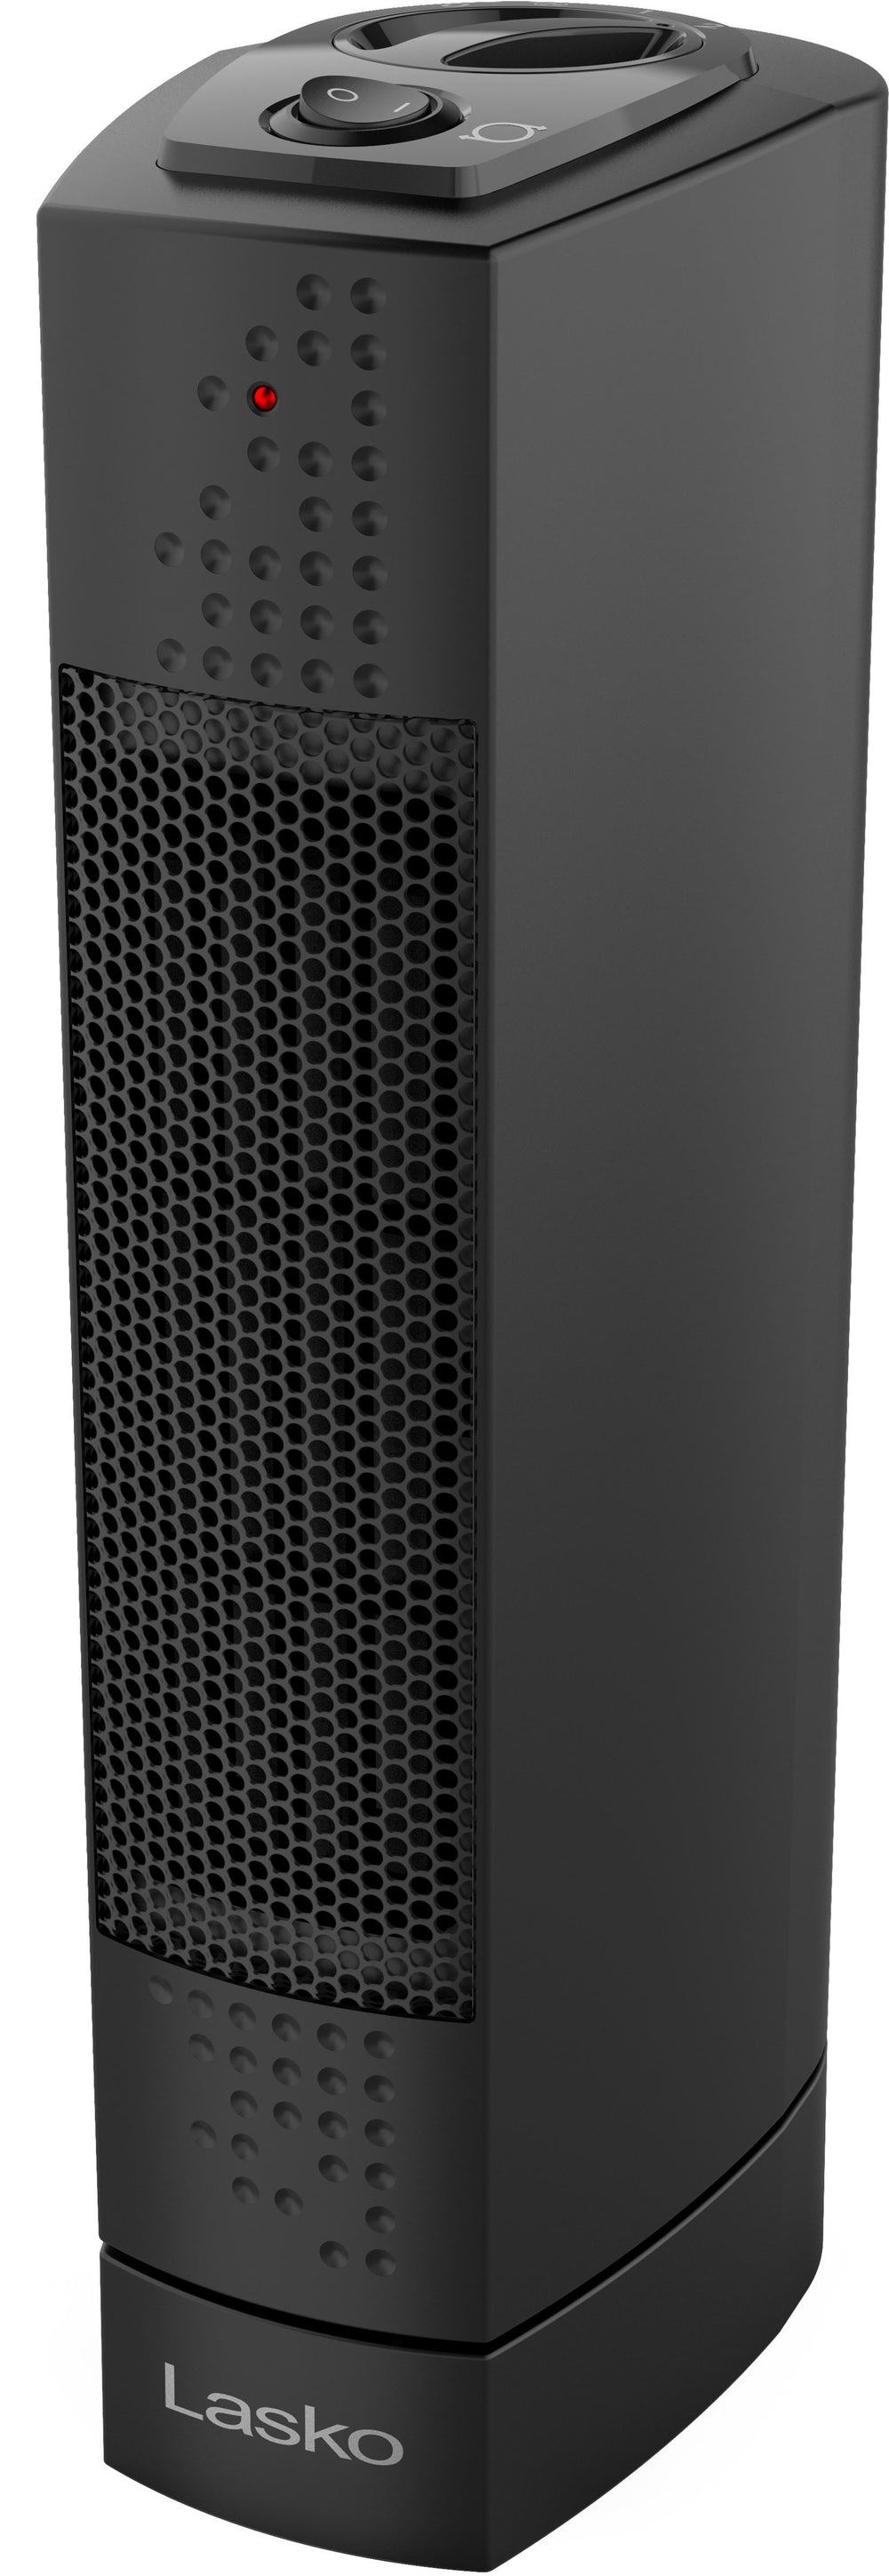 Lasko - 1500-Watt Ultra Slim Desktop Ceramic Tower Space Heater - Black_1